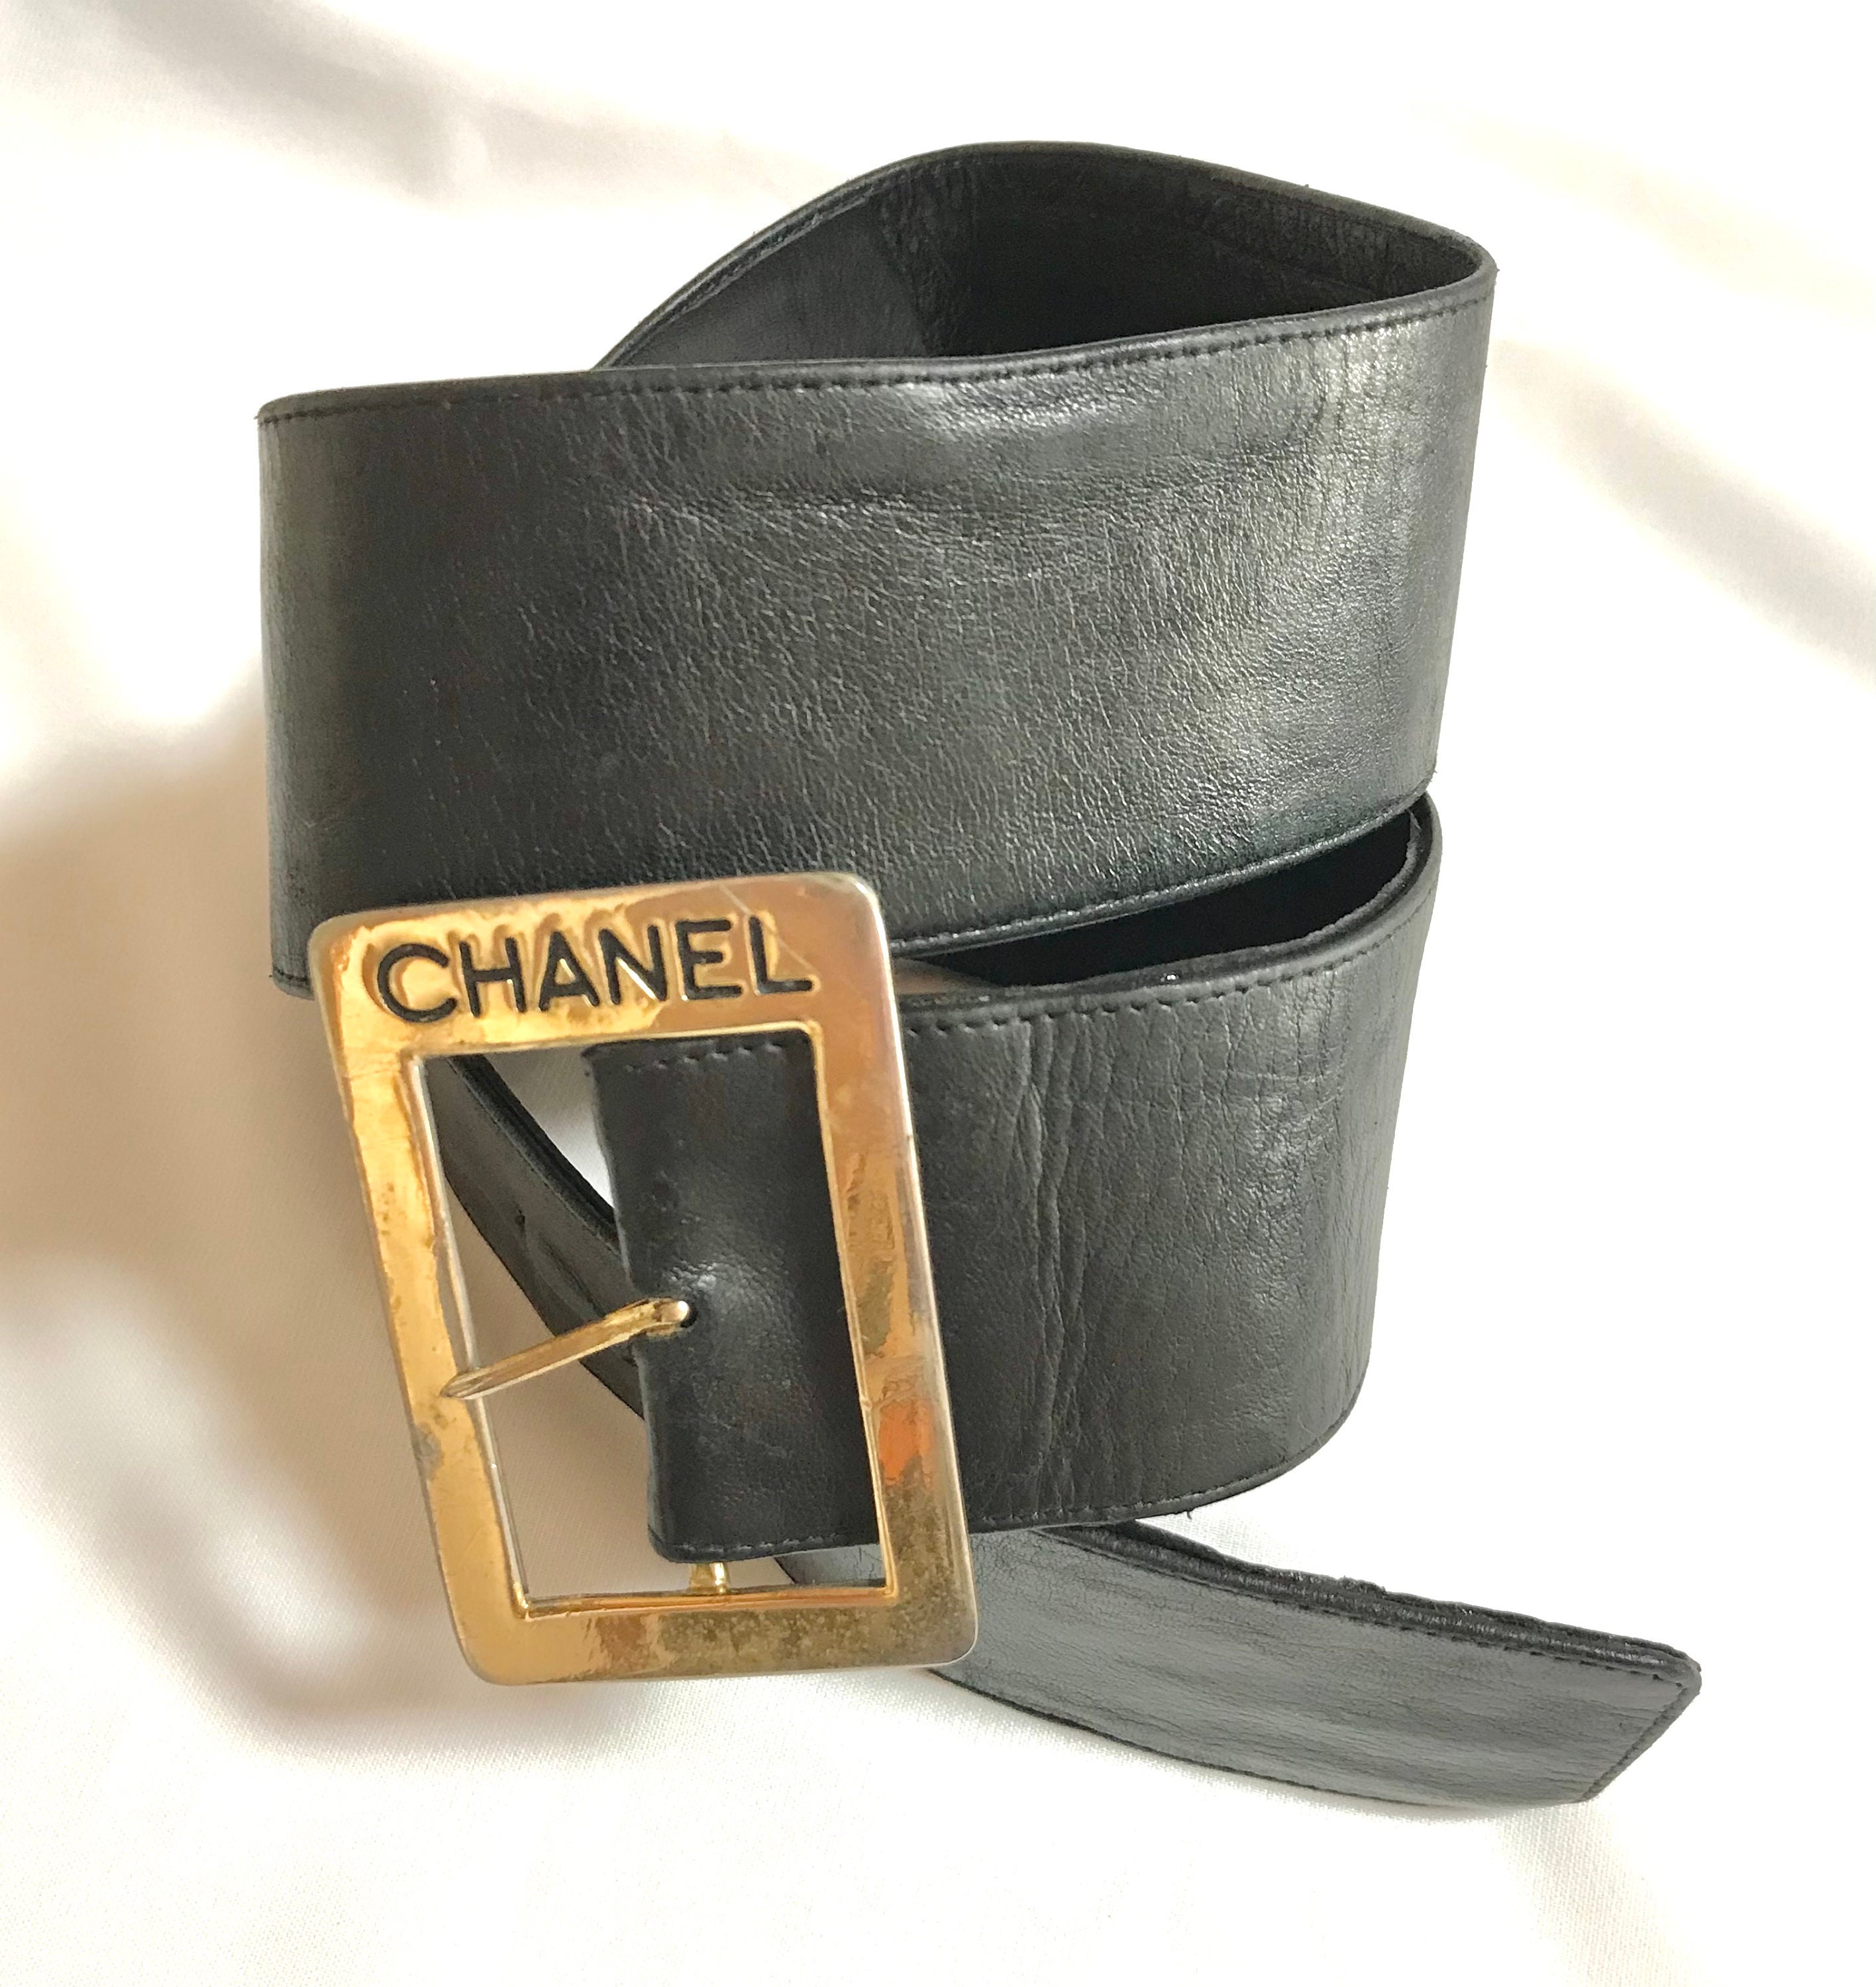 Vintage CHANEL Black Leather Belt With Golden CHANEL Buckle. 